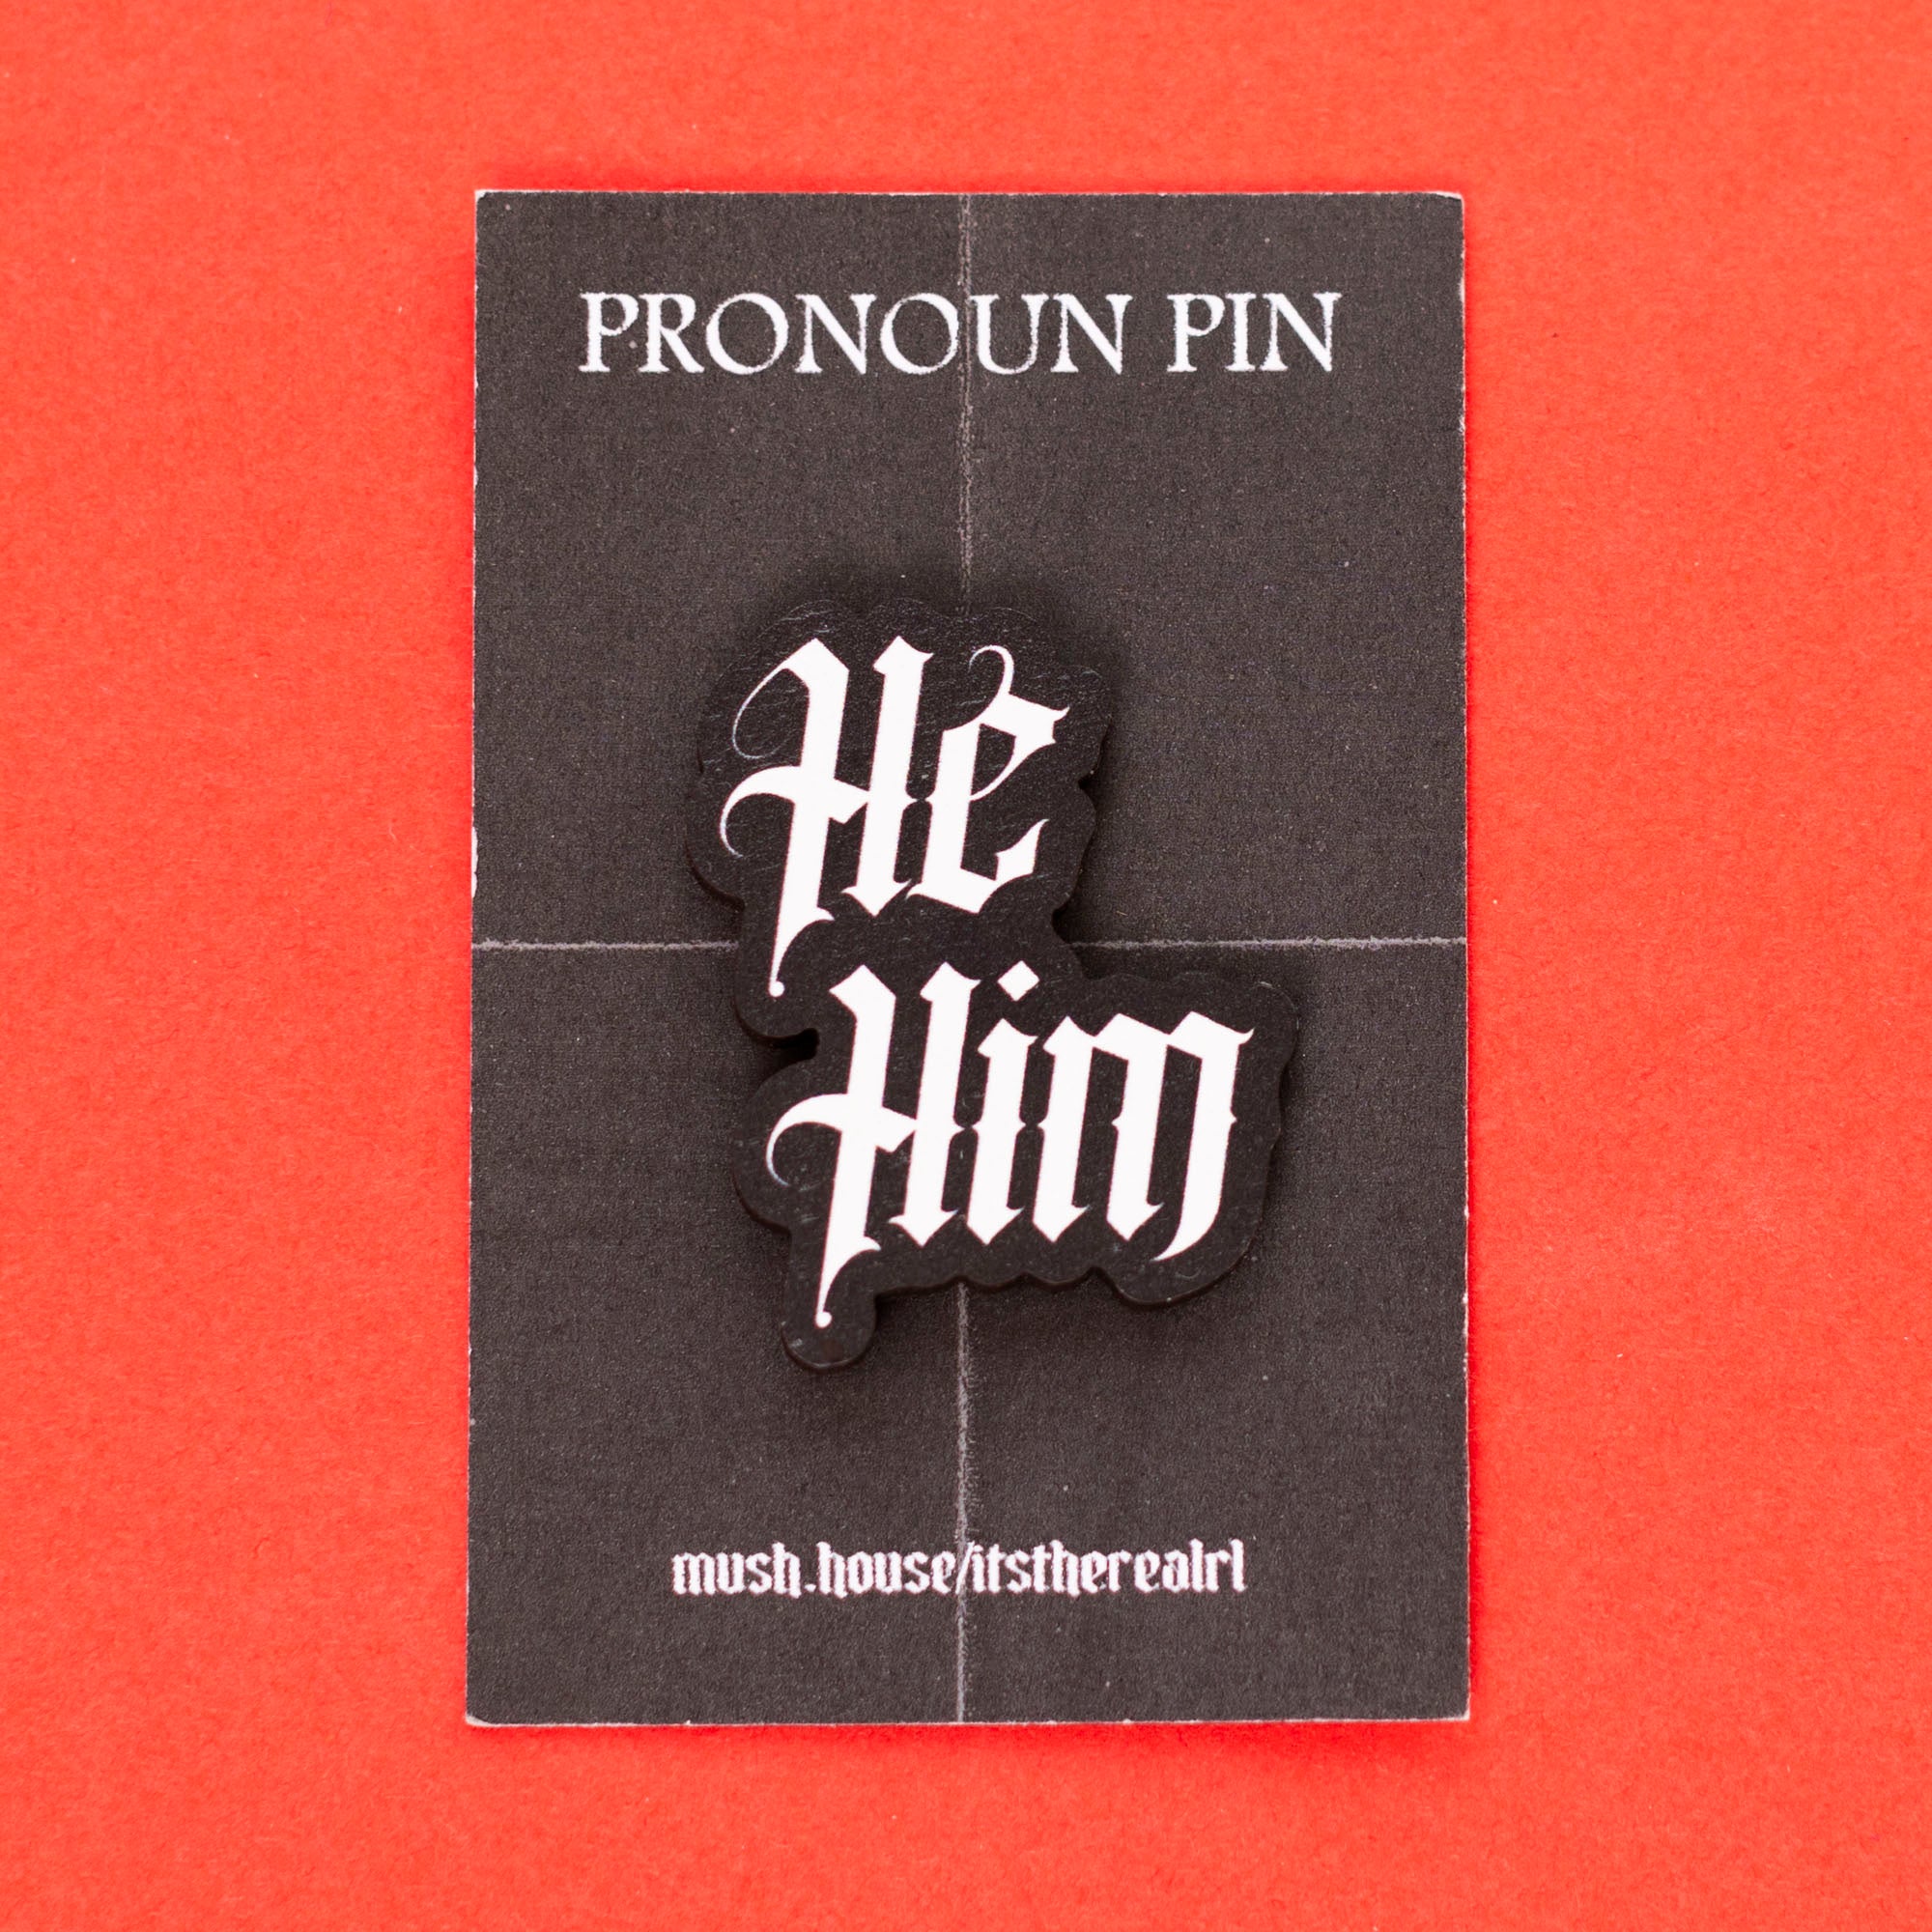 He / Him Gothic Pronoun Pin